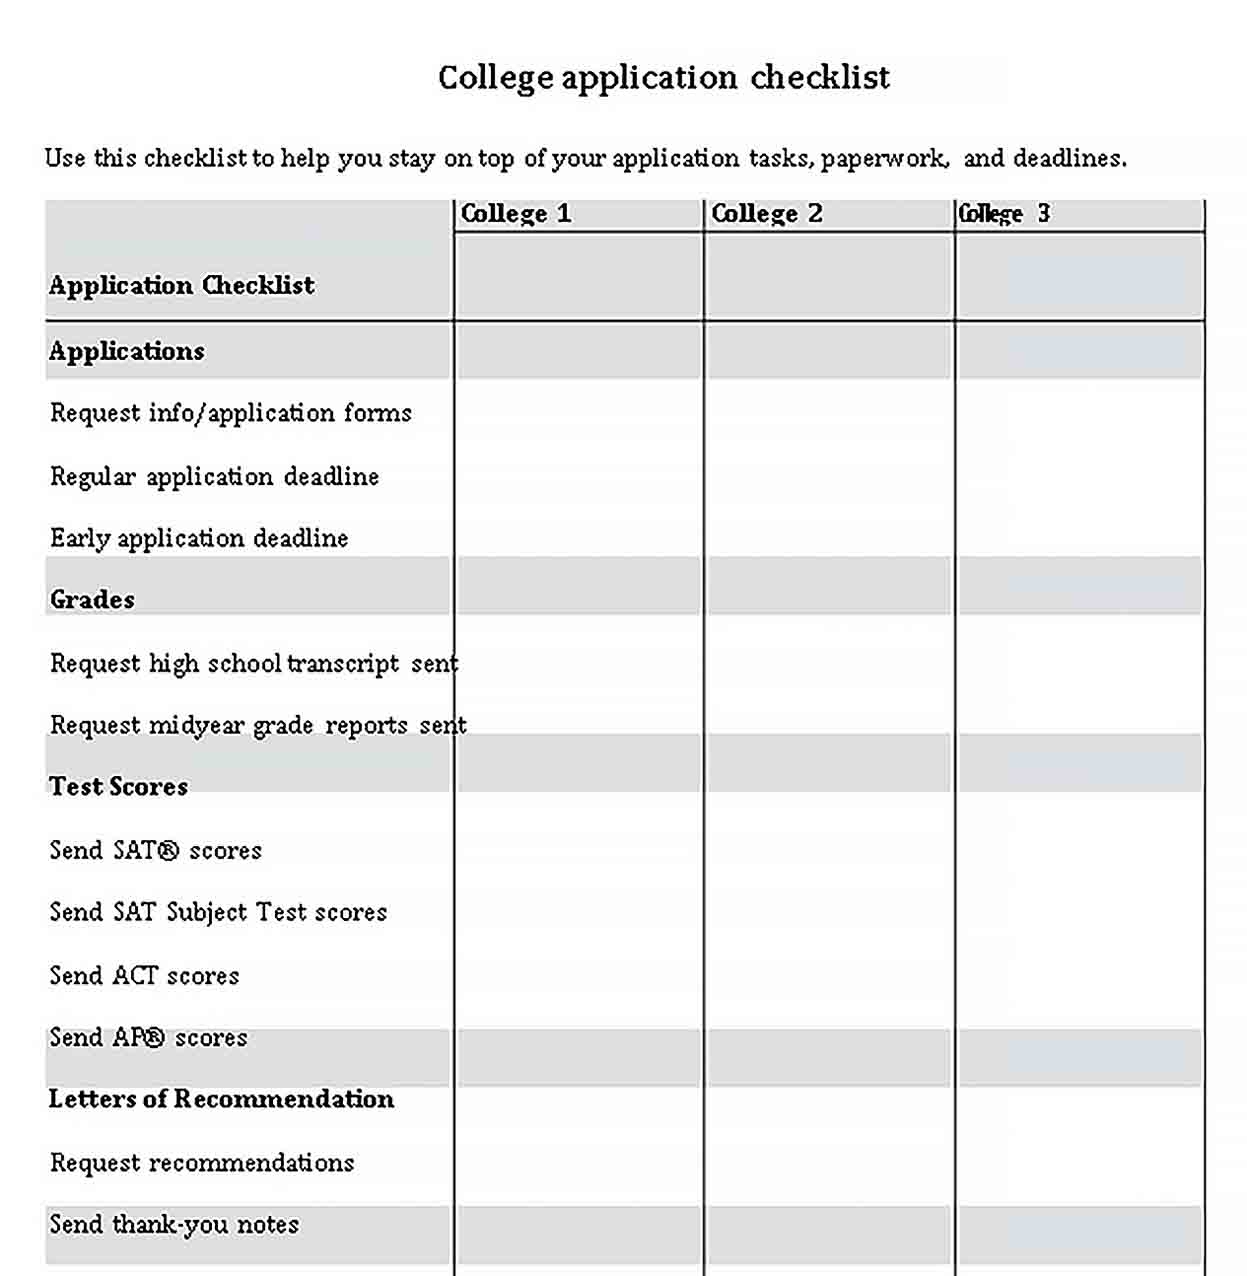 Sample application checklist template  welding rodeo Designer In College Application Checklist Template With Regard To College Application Checklist Template